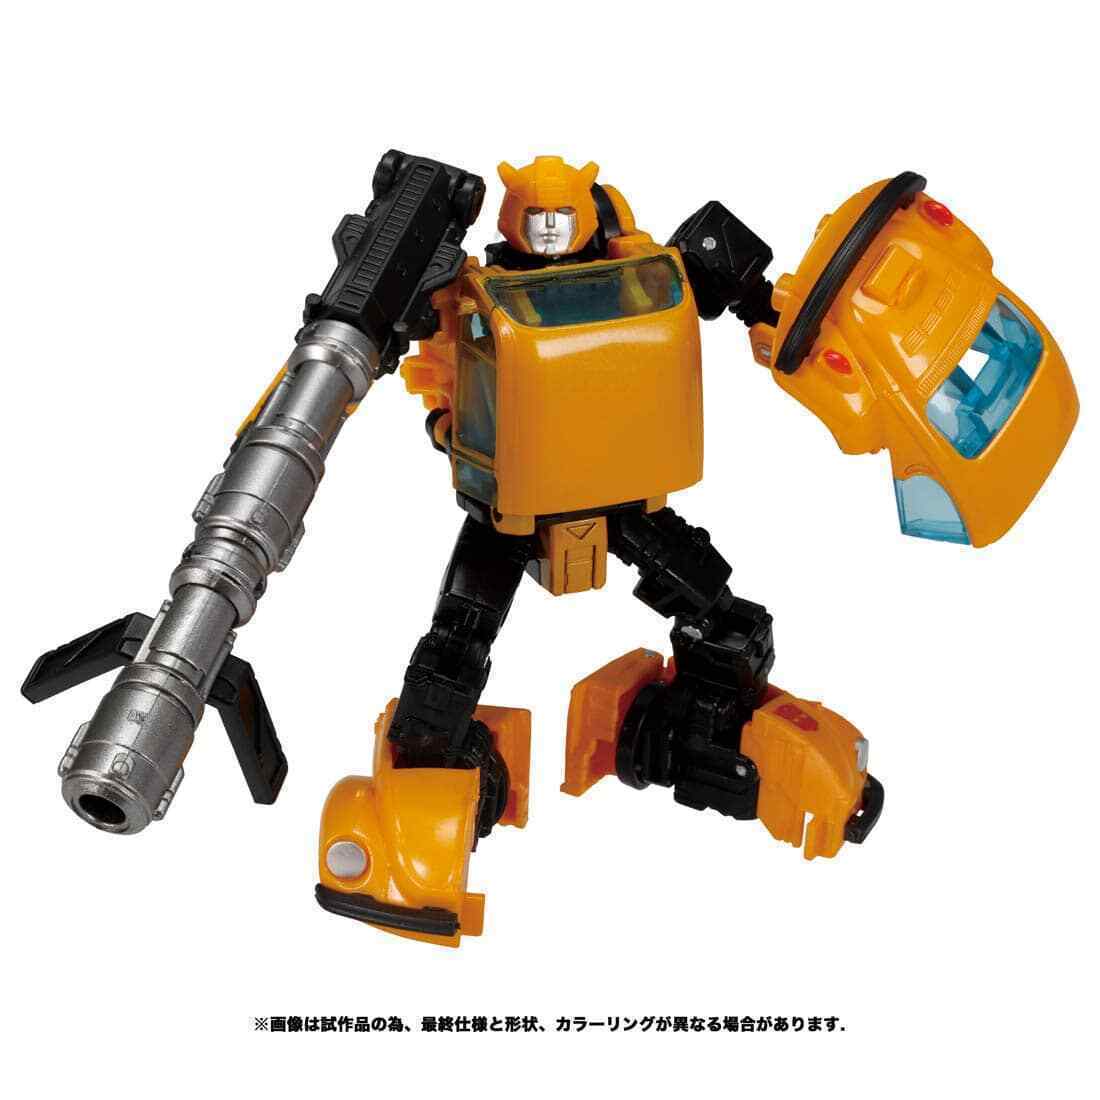 Transformers Generations War For Cybertron Deluxe Bumblebee Action Figure Netflix Exclusive WFC-09 (Japan Ver.)